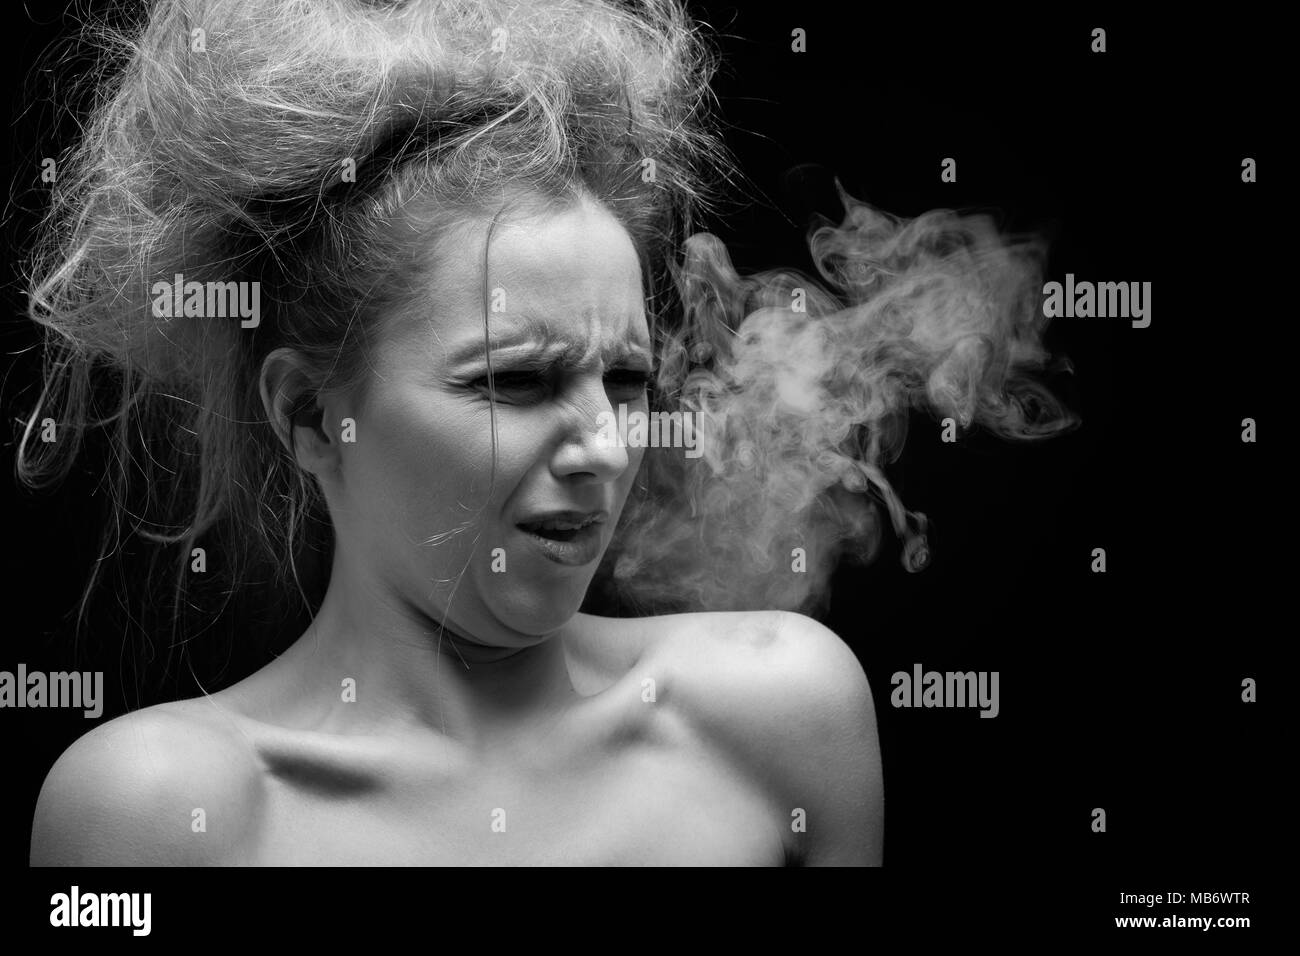 Chica toses del humo del tabaco sobre fondo negro, Monocromo Foto de stock